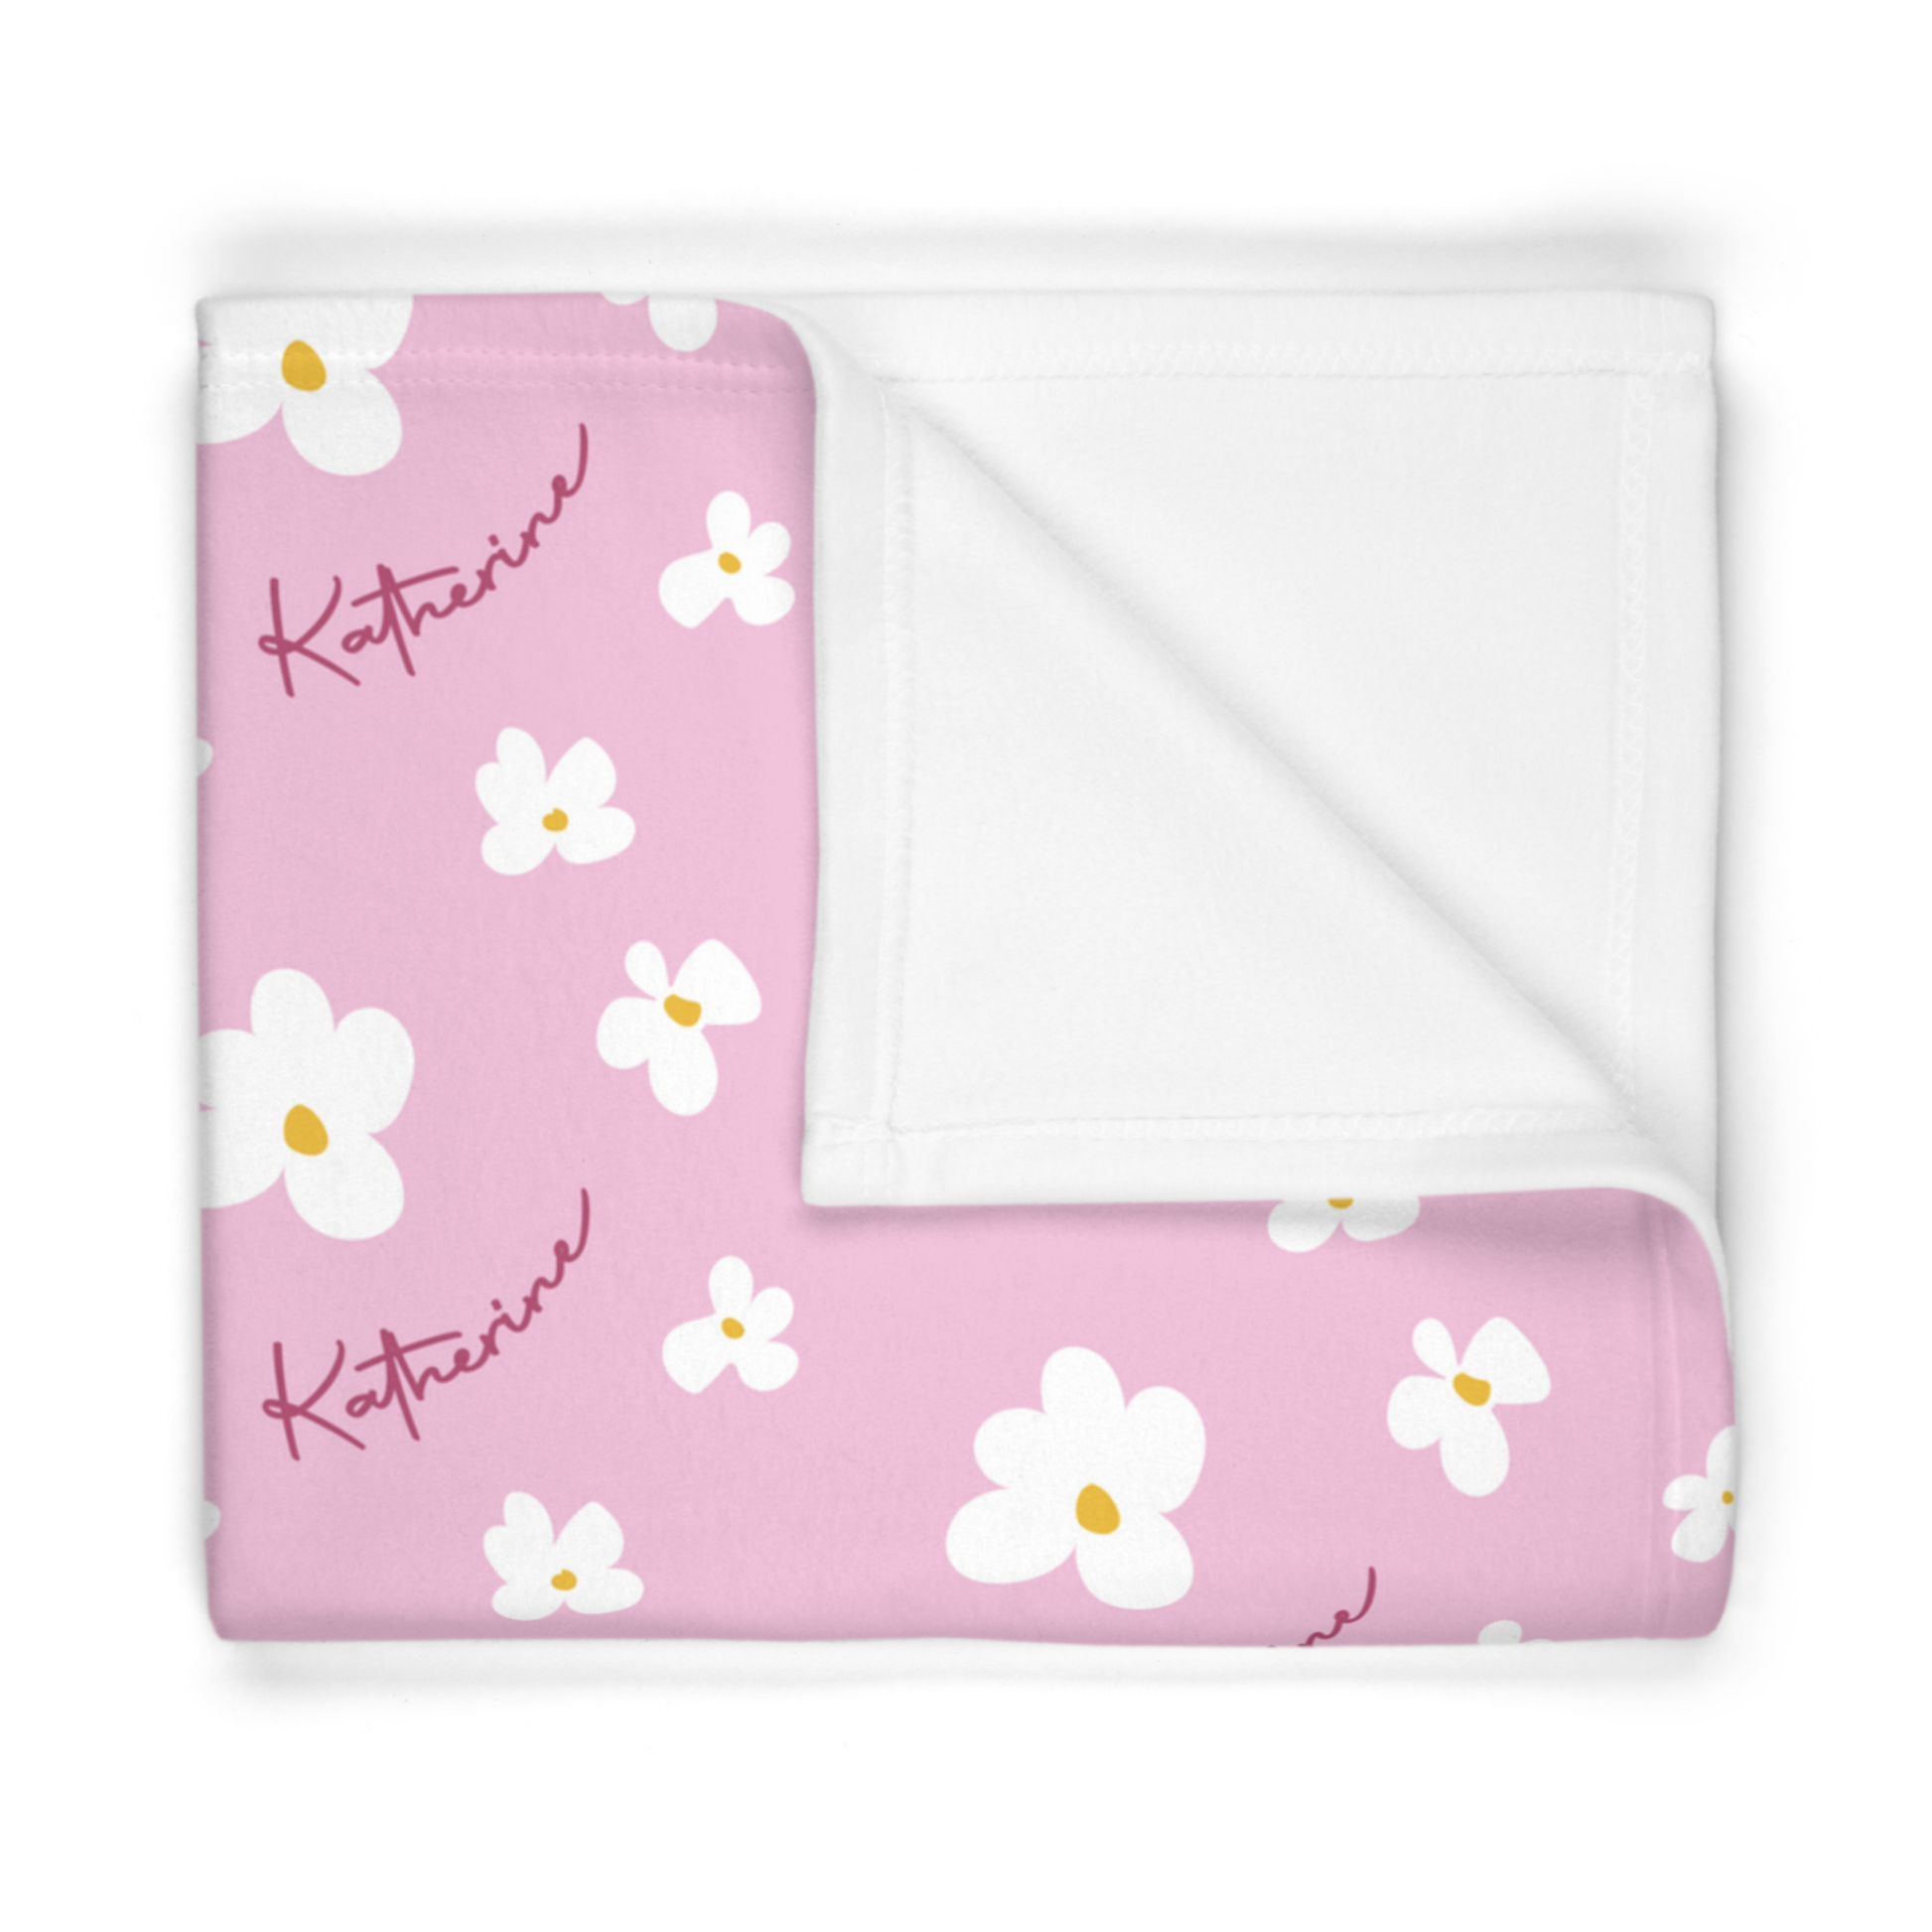 Folded fleece fabric personalized baby blanket in pink daisy pattern